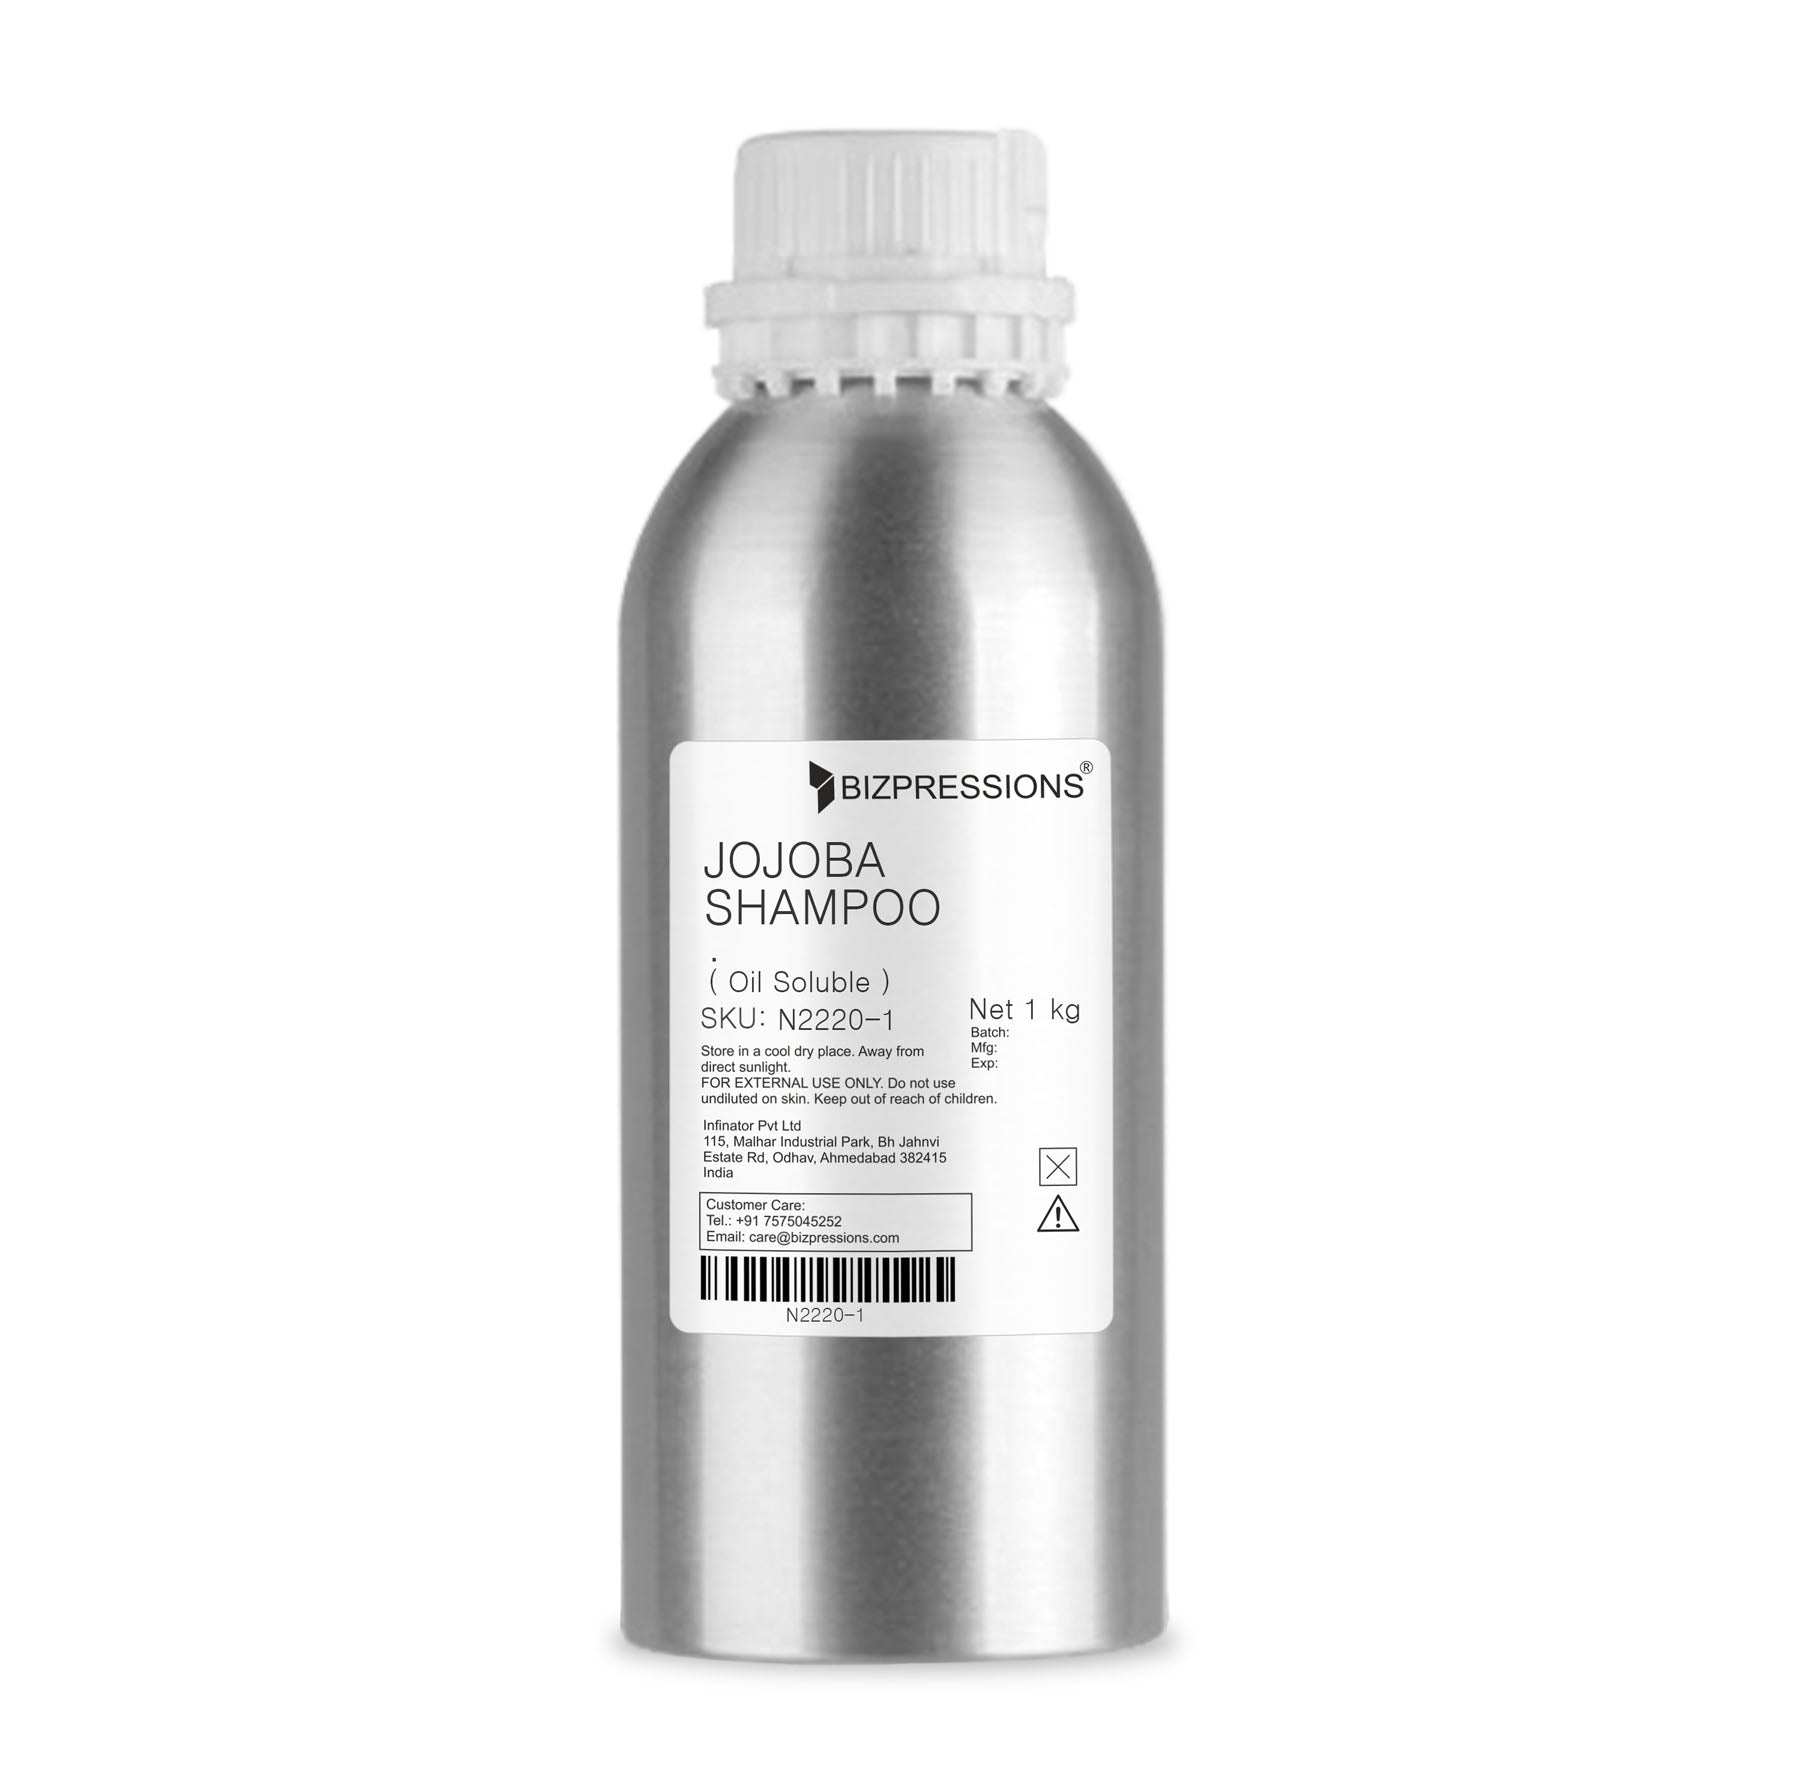 JOJOBA SHAMPOO - Fragrance ( Oil Soluble ) - 1 kg